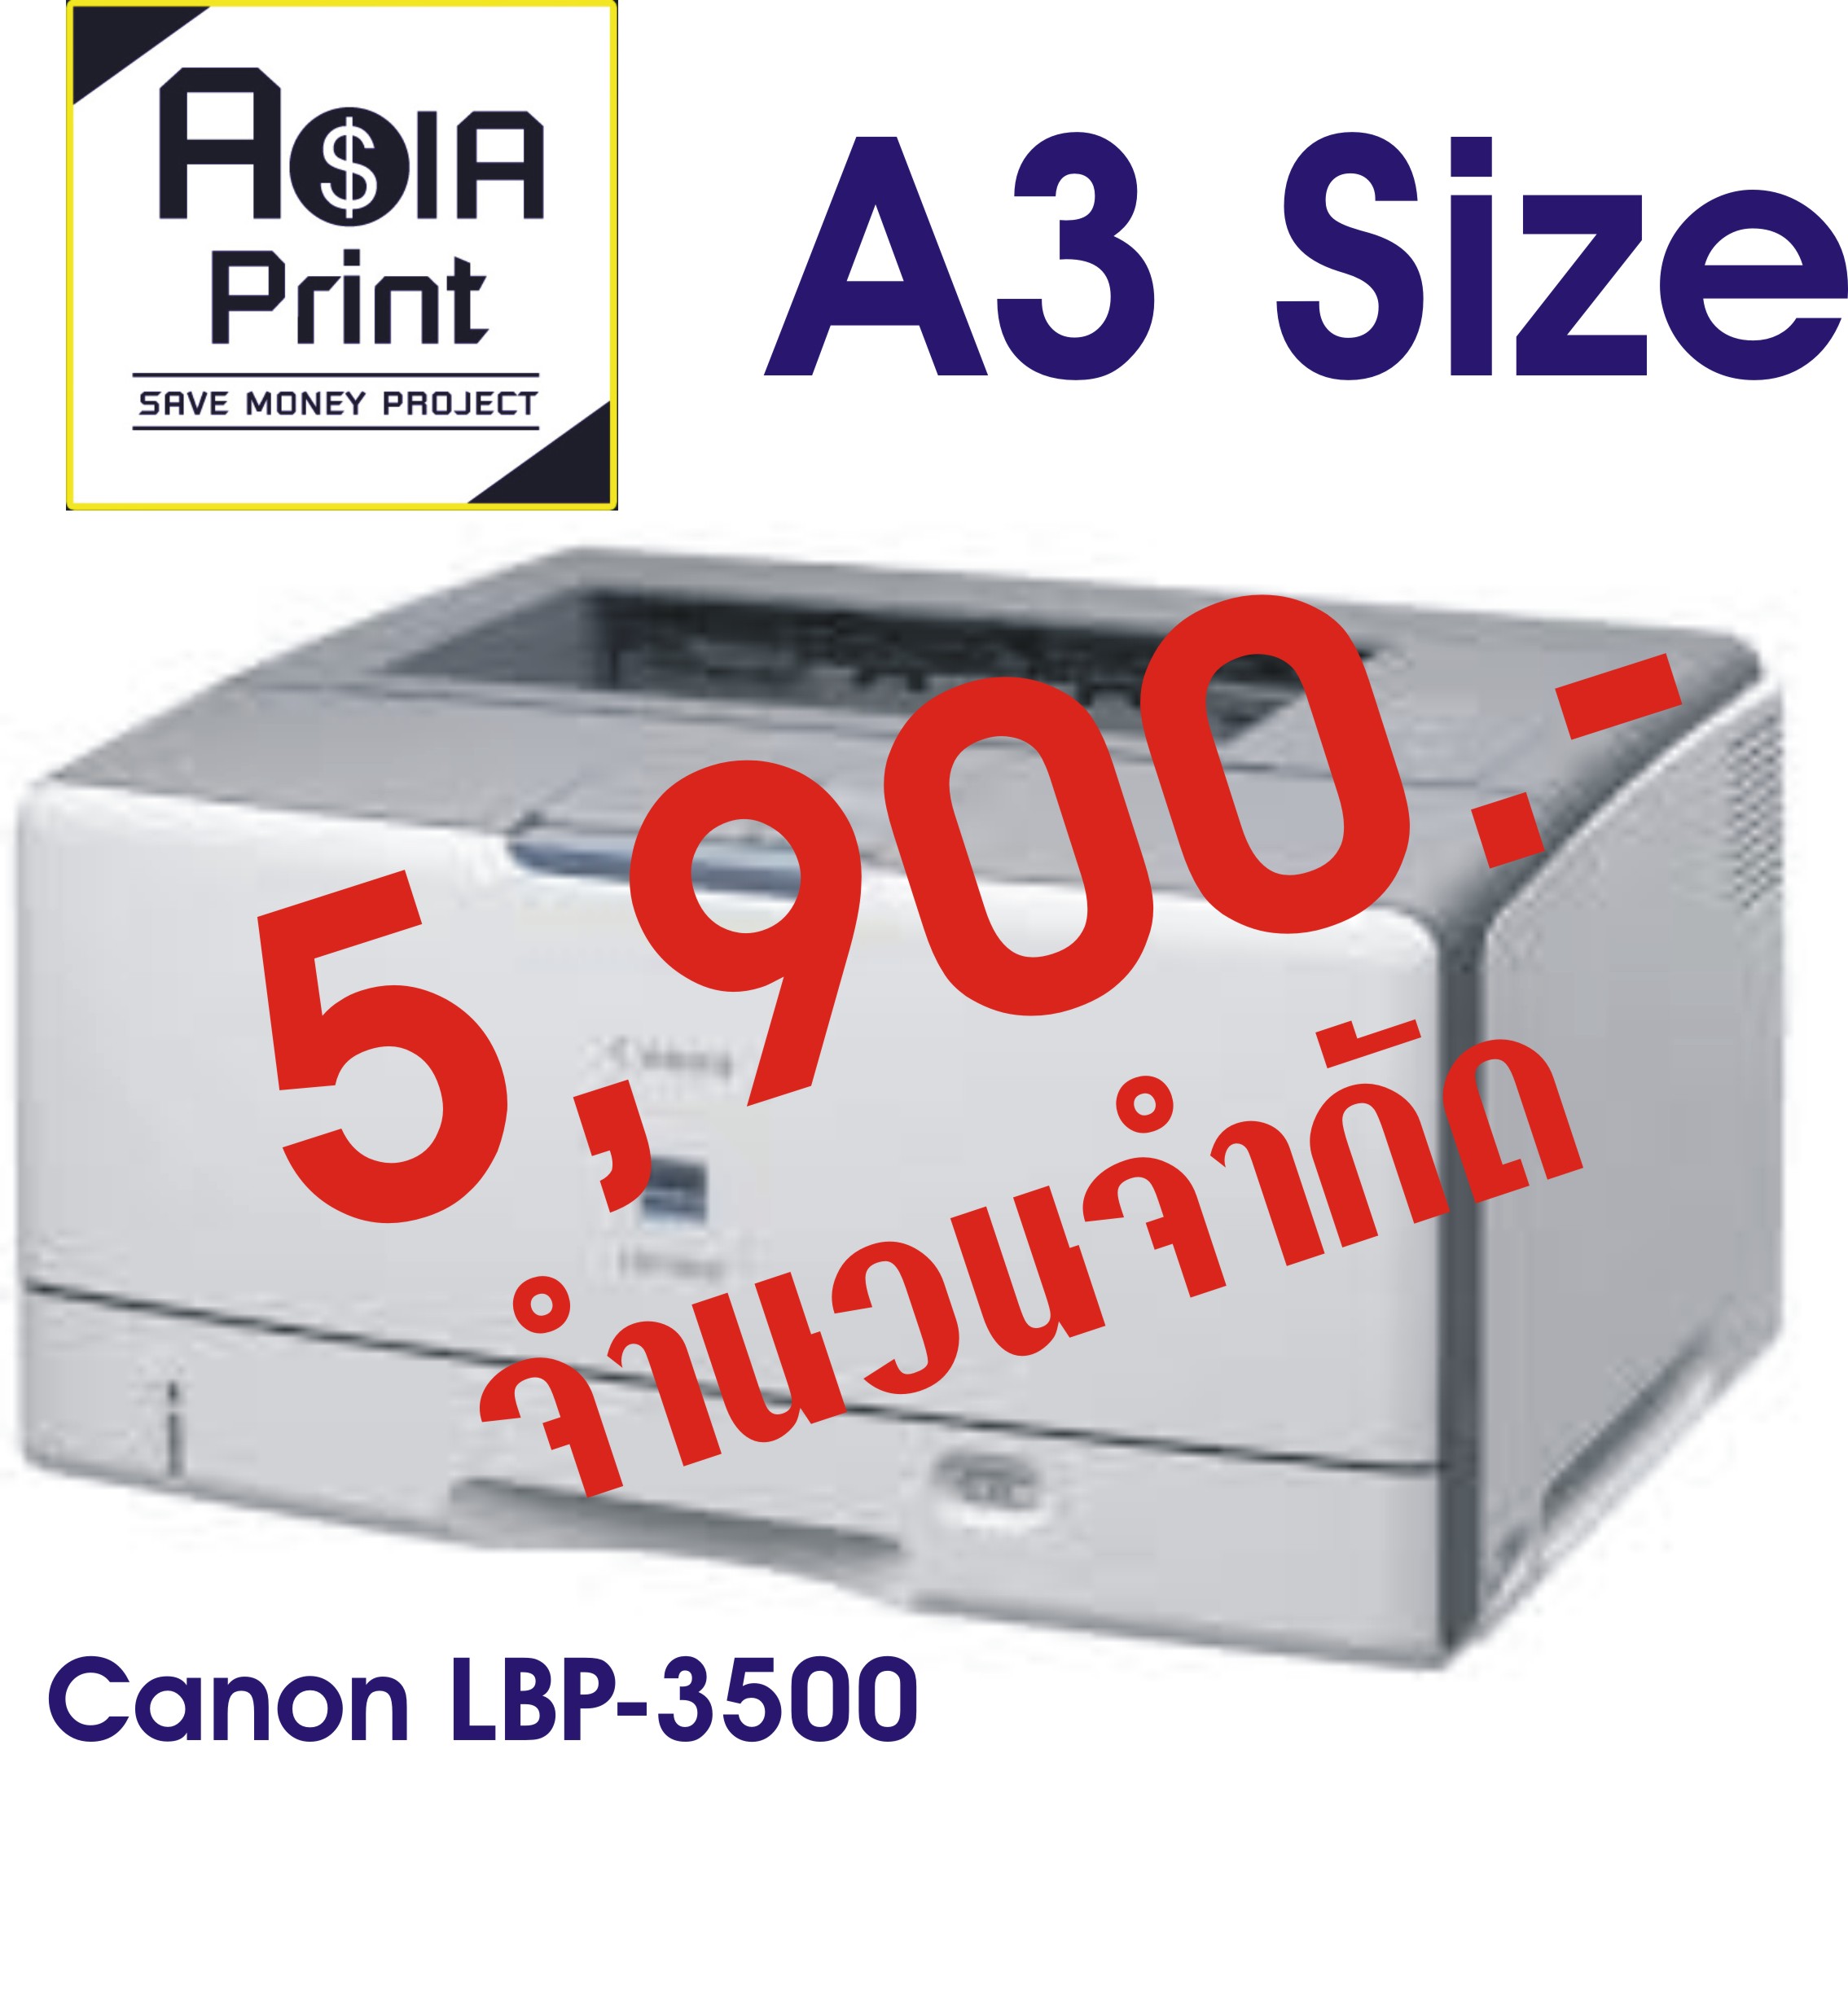 Asiaprint Save Money Project ขอเสนอ Canon LBP 3500 printer A3 ที่สวยที่สุดถูกที่สุดในท้องตลาด ใช้หมึกเบอร์เดียวกับ HP Laserjet 5200 สินค้ามีจำนวนจำกัด รูปที่ 1